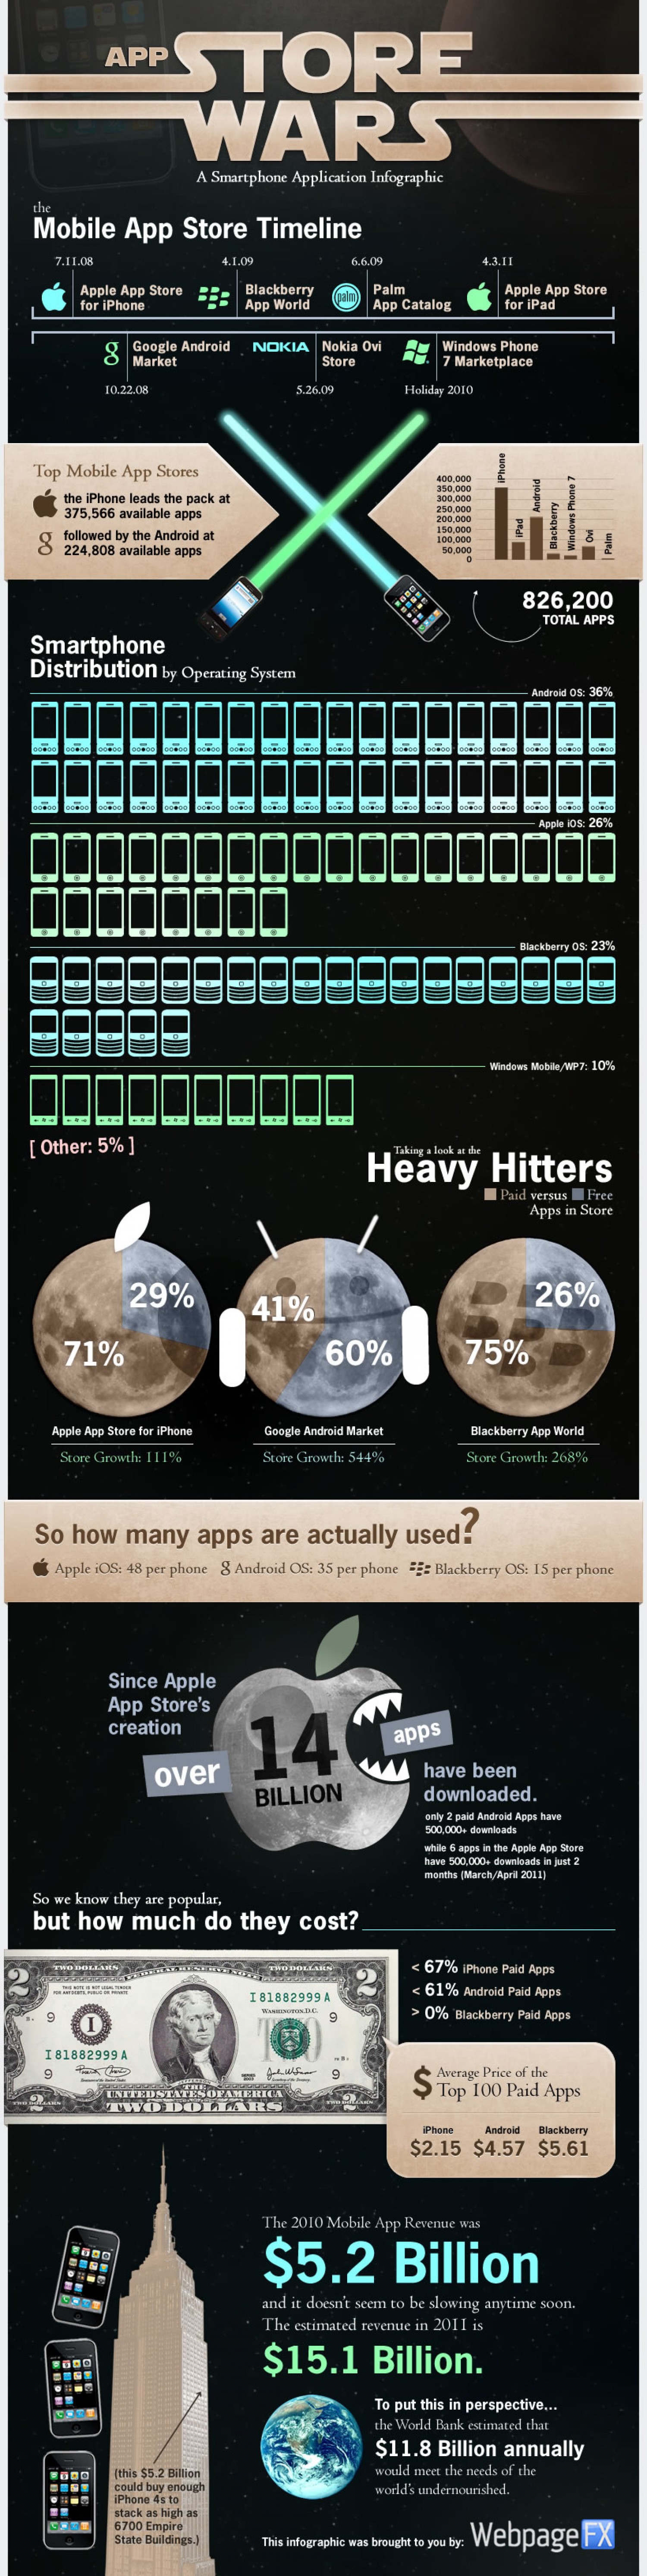 App store wars